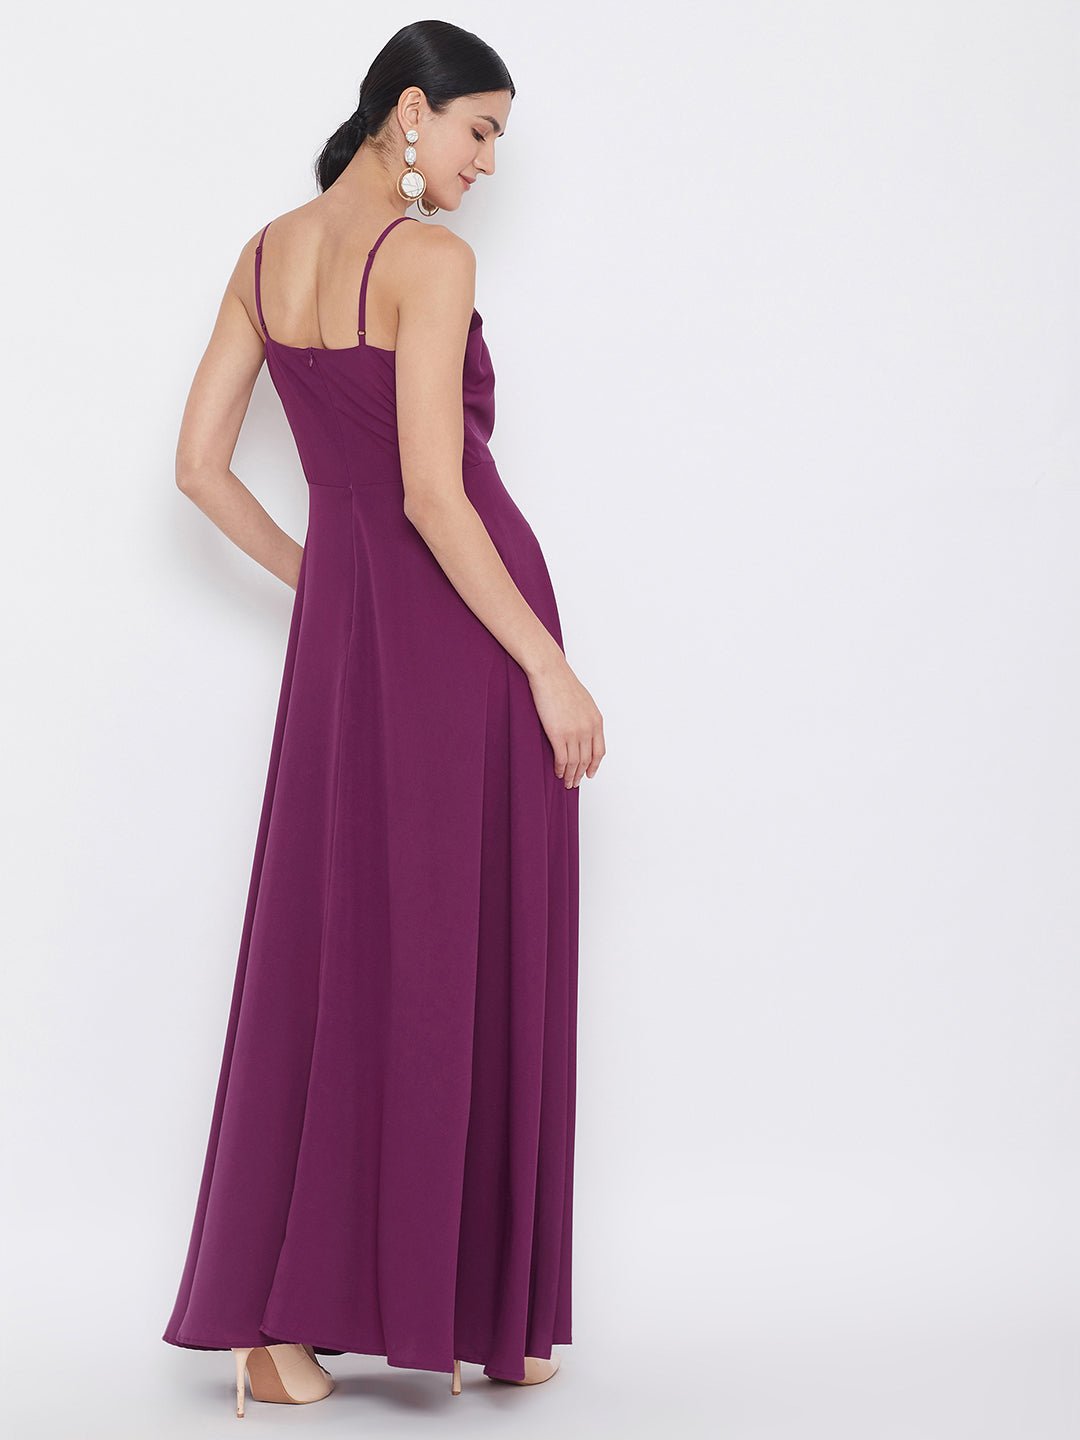 Folk Republic Women Solid Dark Purple V-Neck A-Line Maxi Dress - #folk republic#